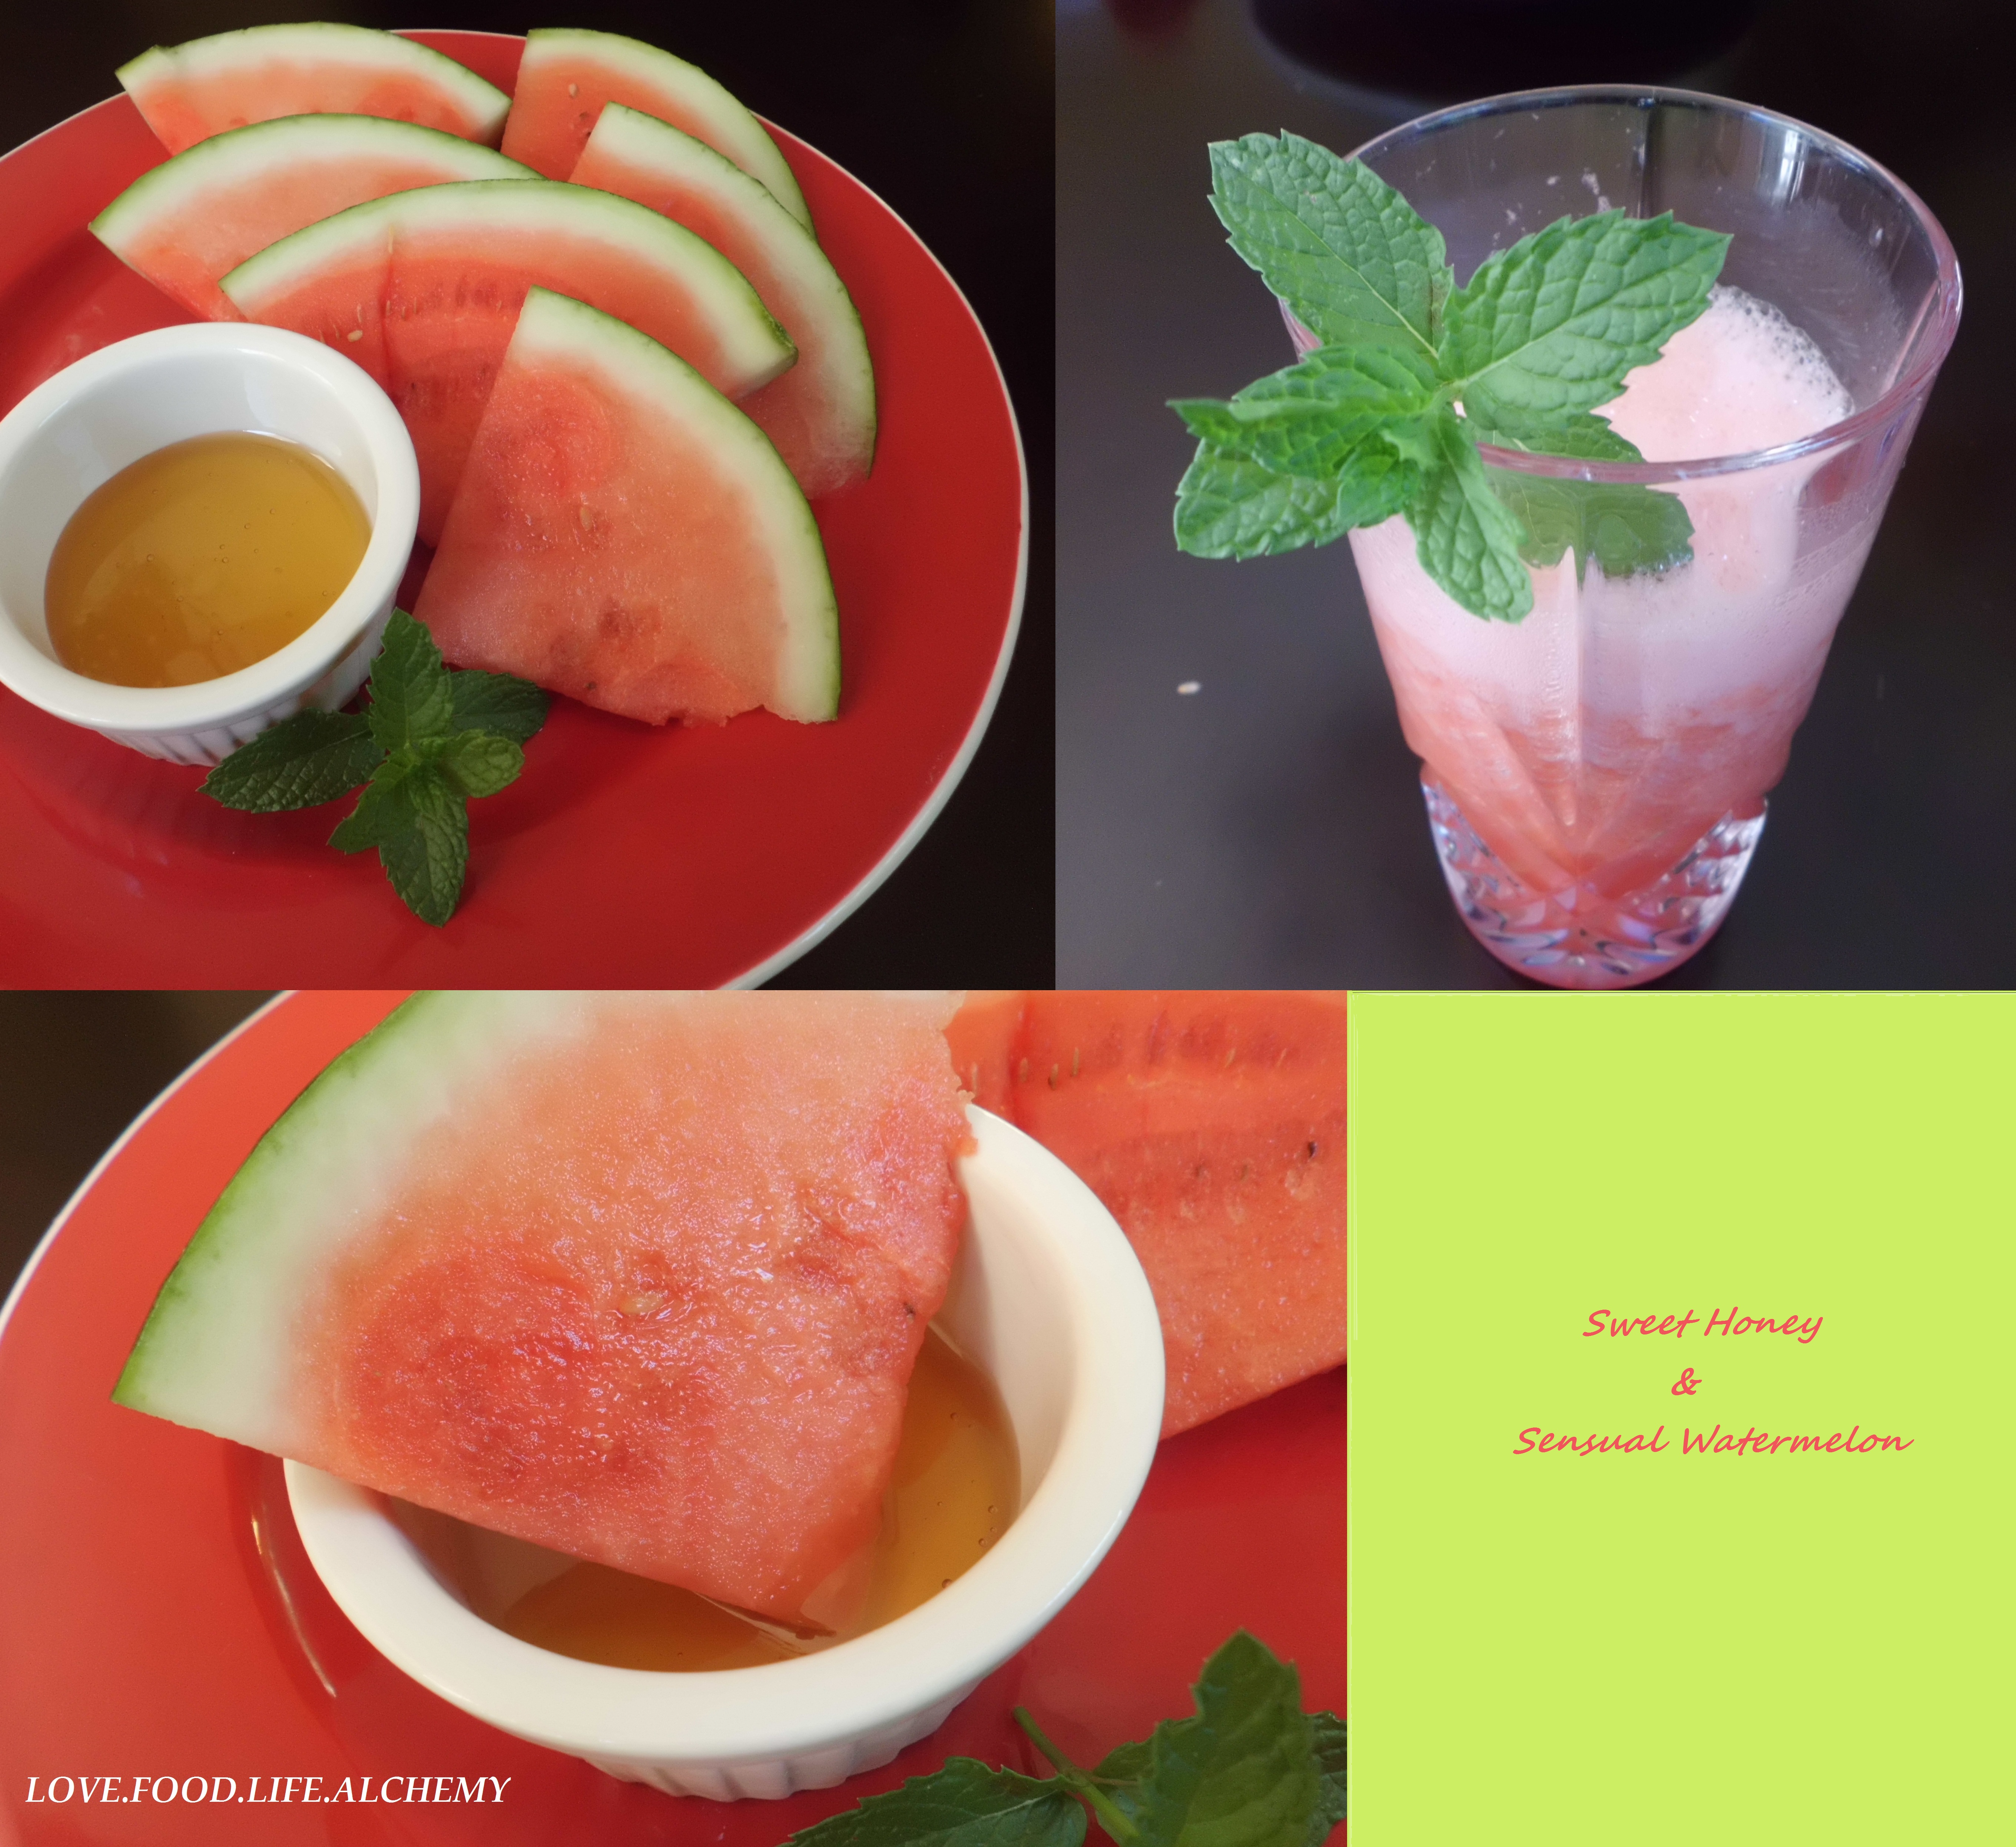 Watermelon & Honey Sauce alongside a Sweet Watermelon Shake